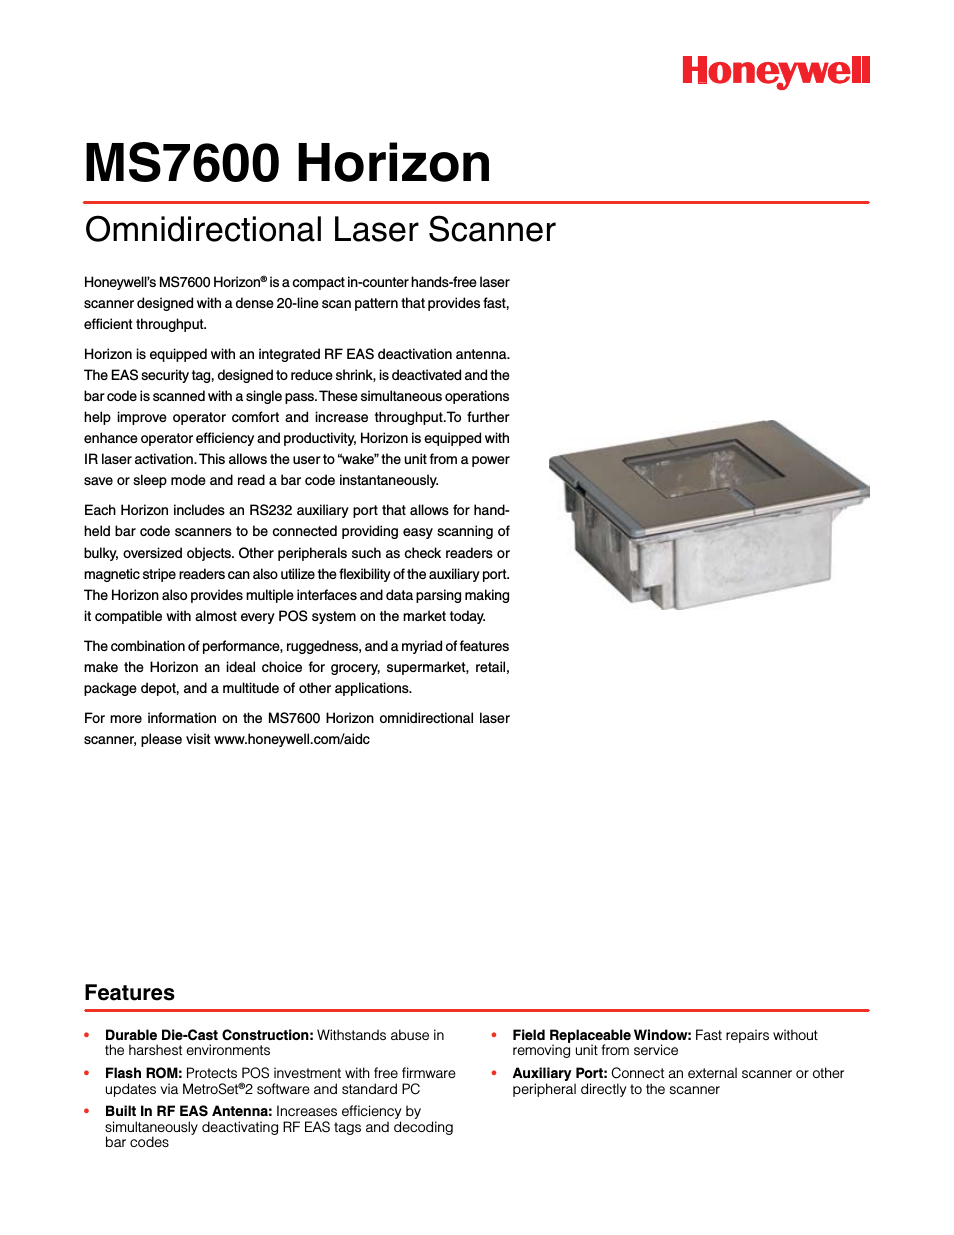 Horizon MS7600